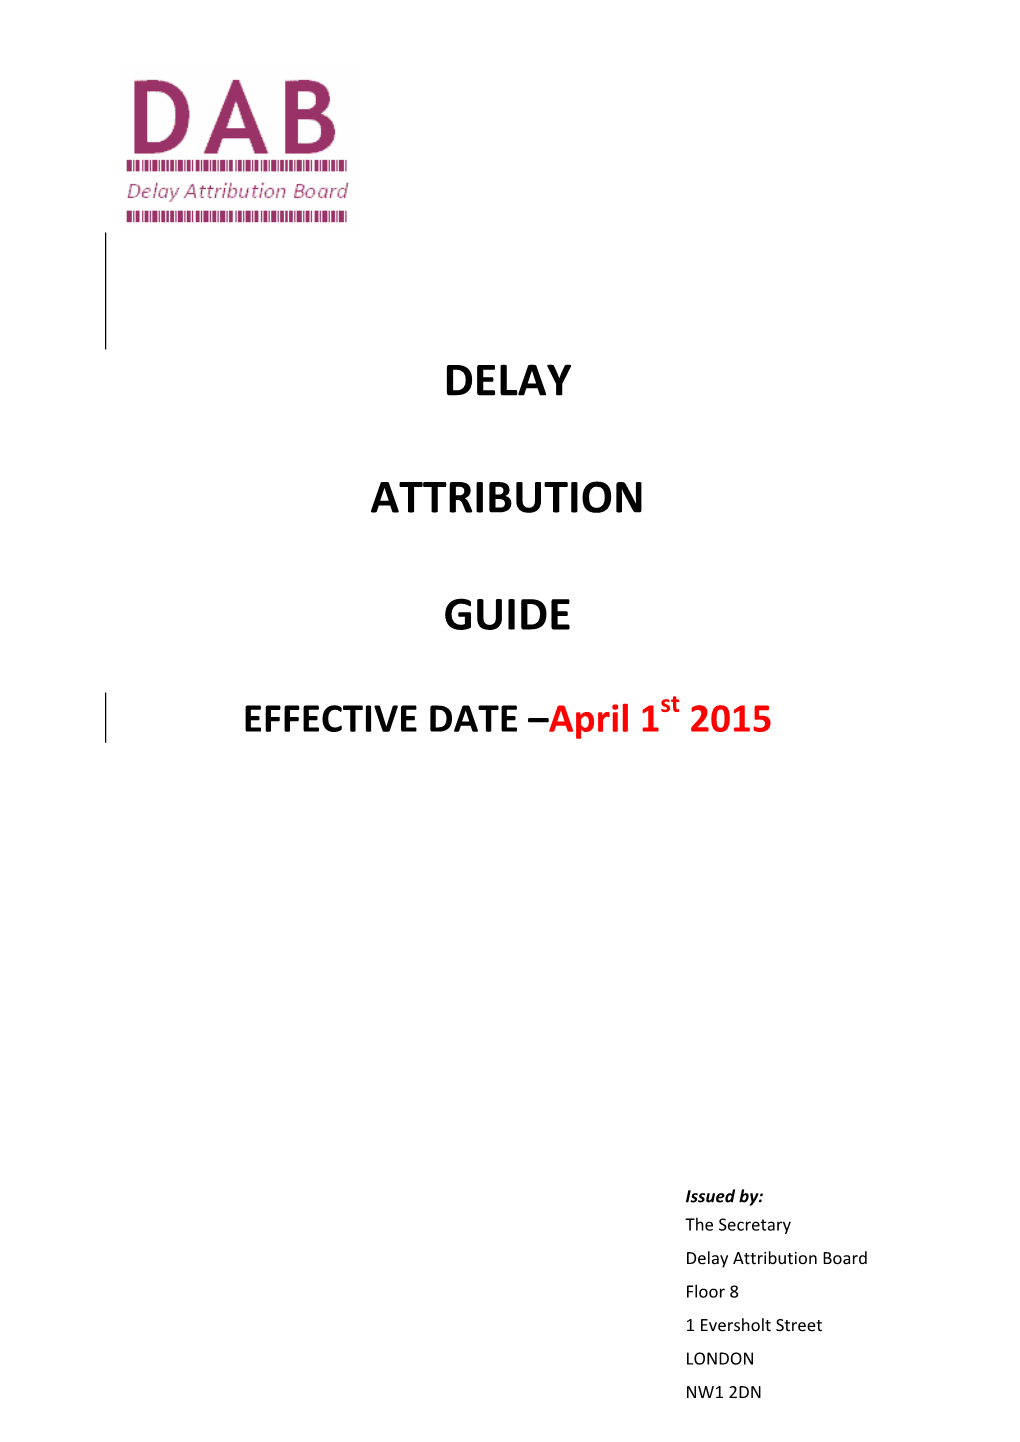 Delay Attribution Guide